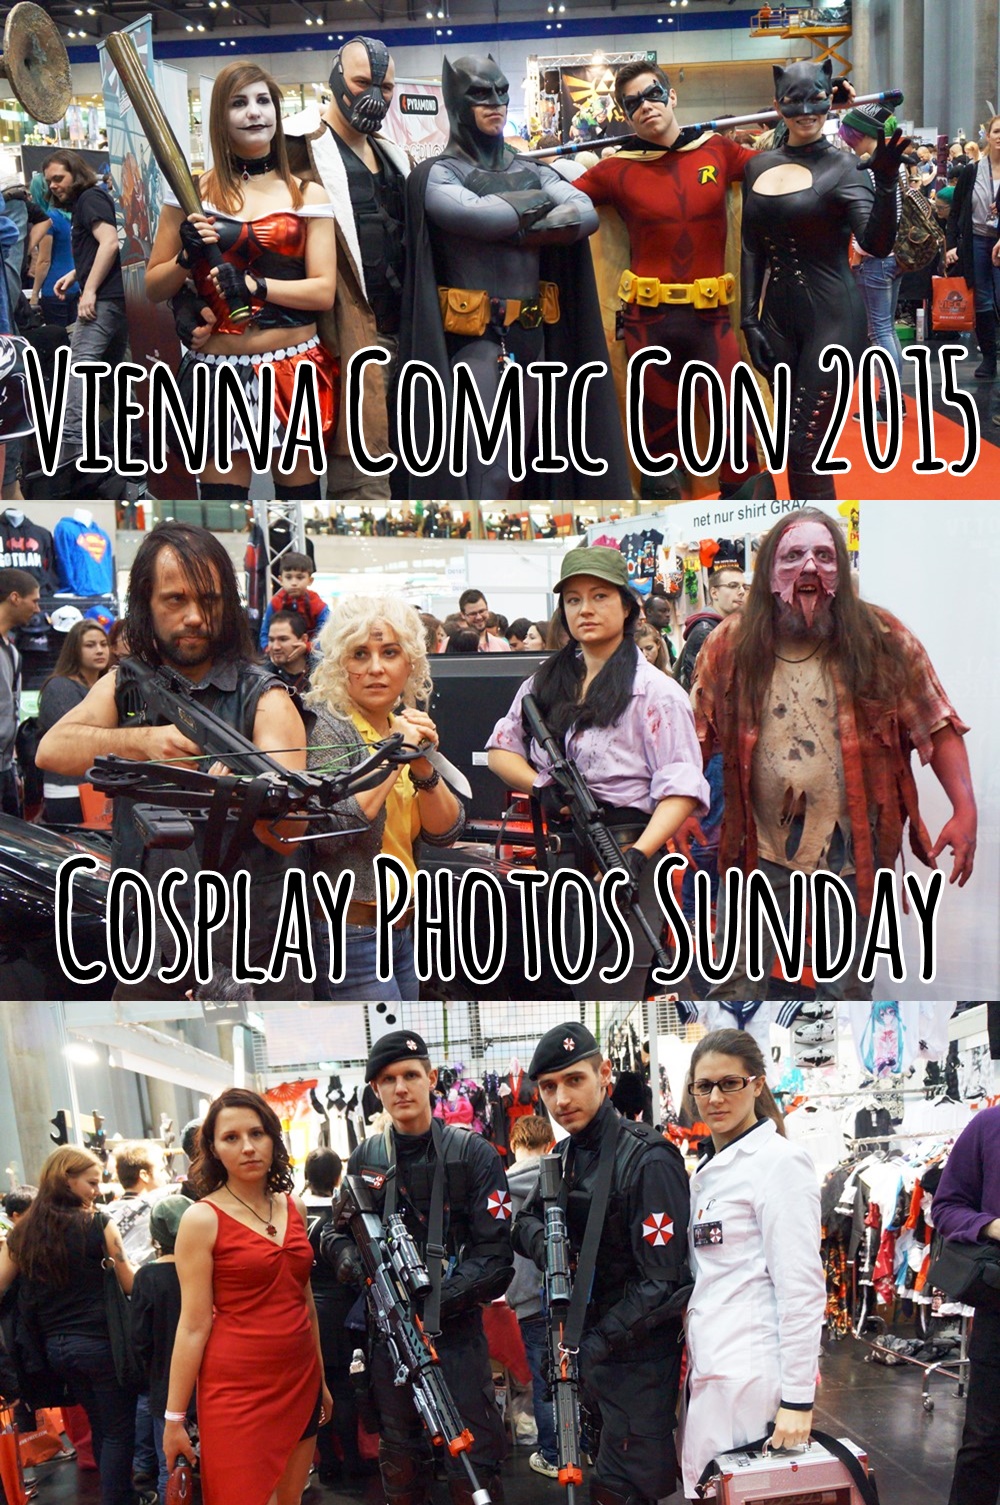 Vienna Comic Con 2015 - Cosplay Photos Sunday